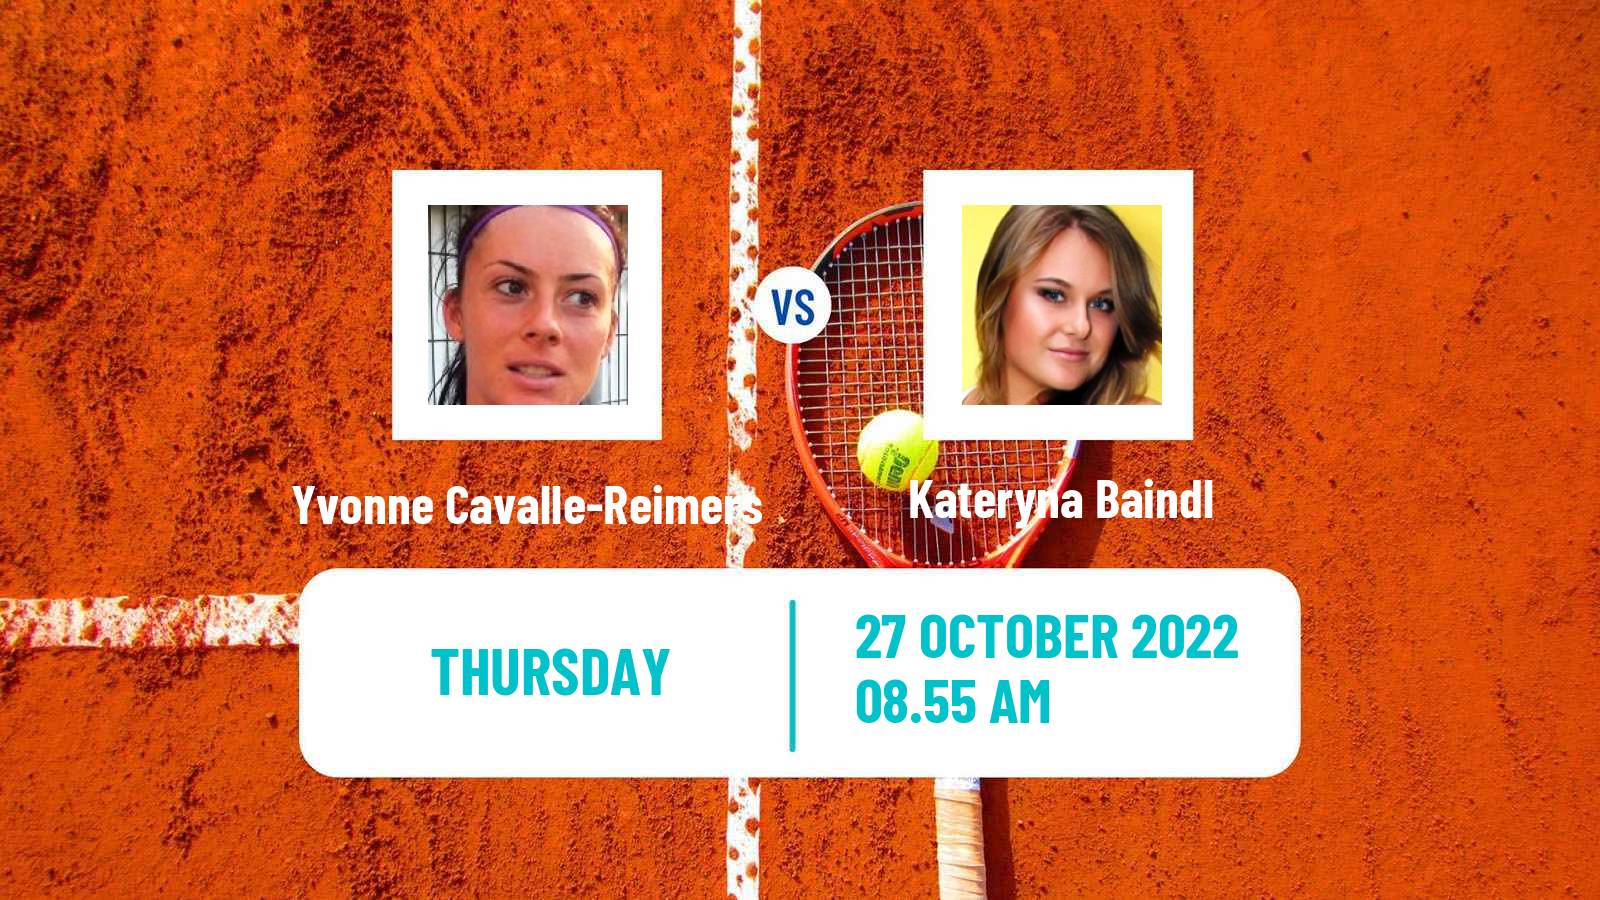 Tennis ITF Tournaments Yvonne Cavalle-Reimers - Kateryna Baindl